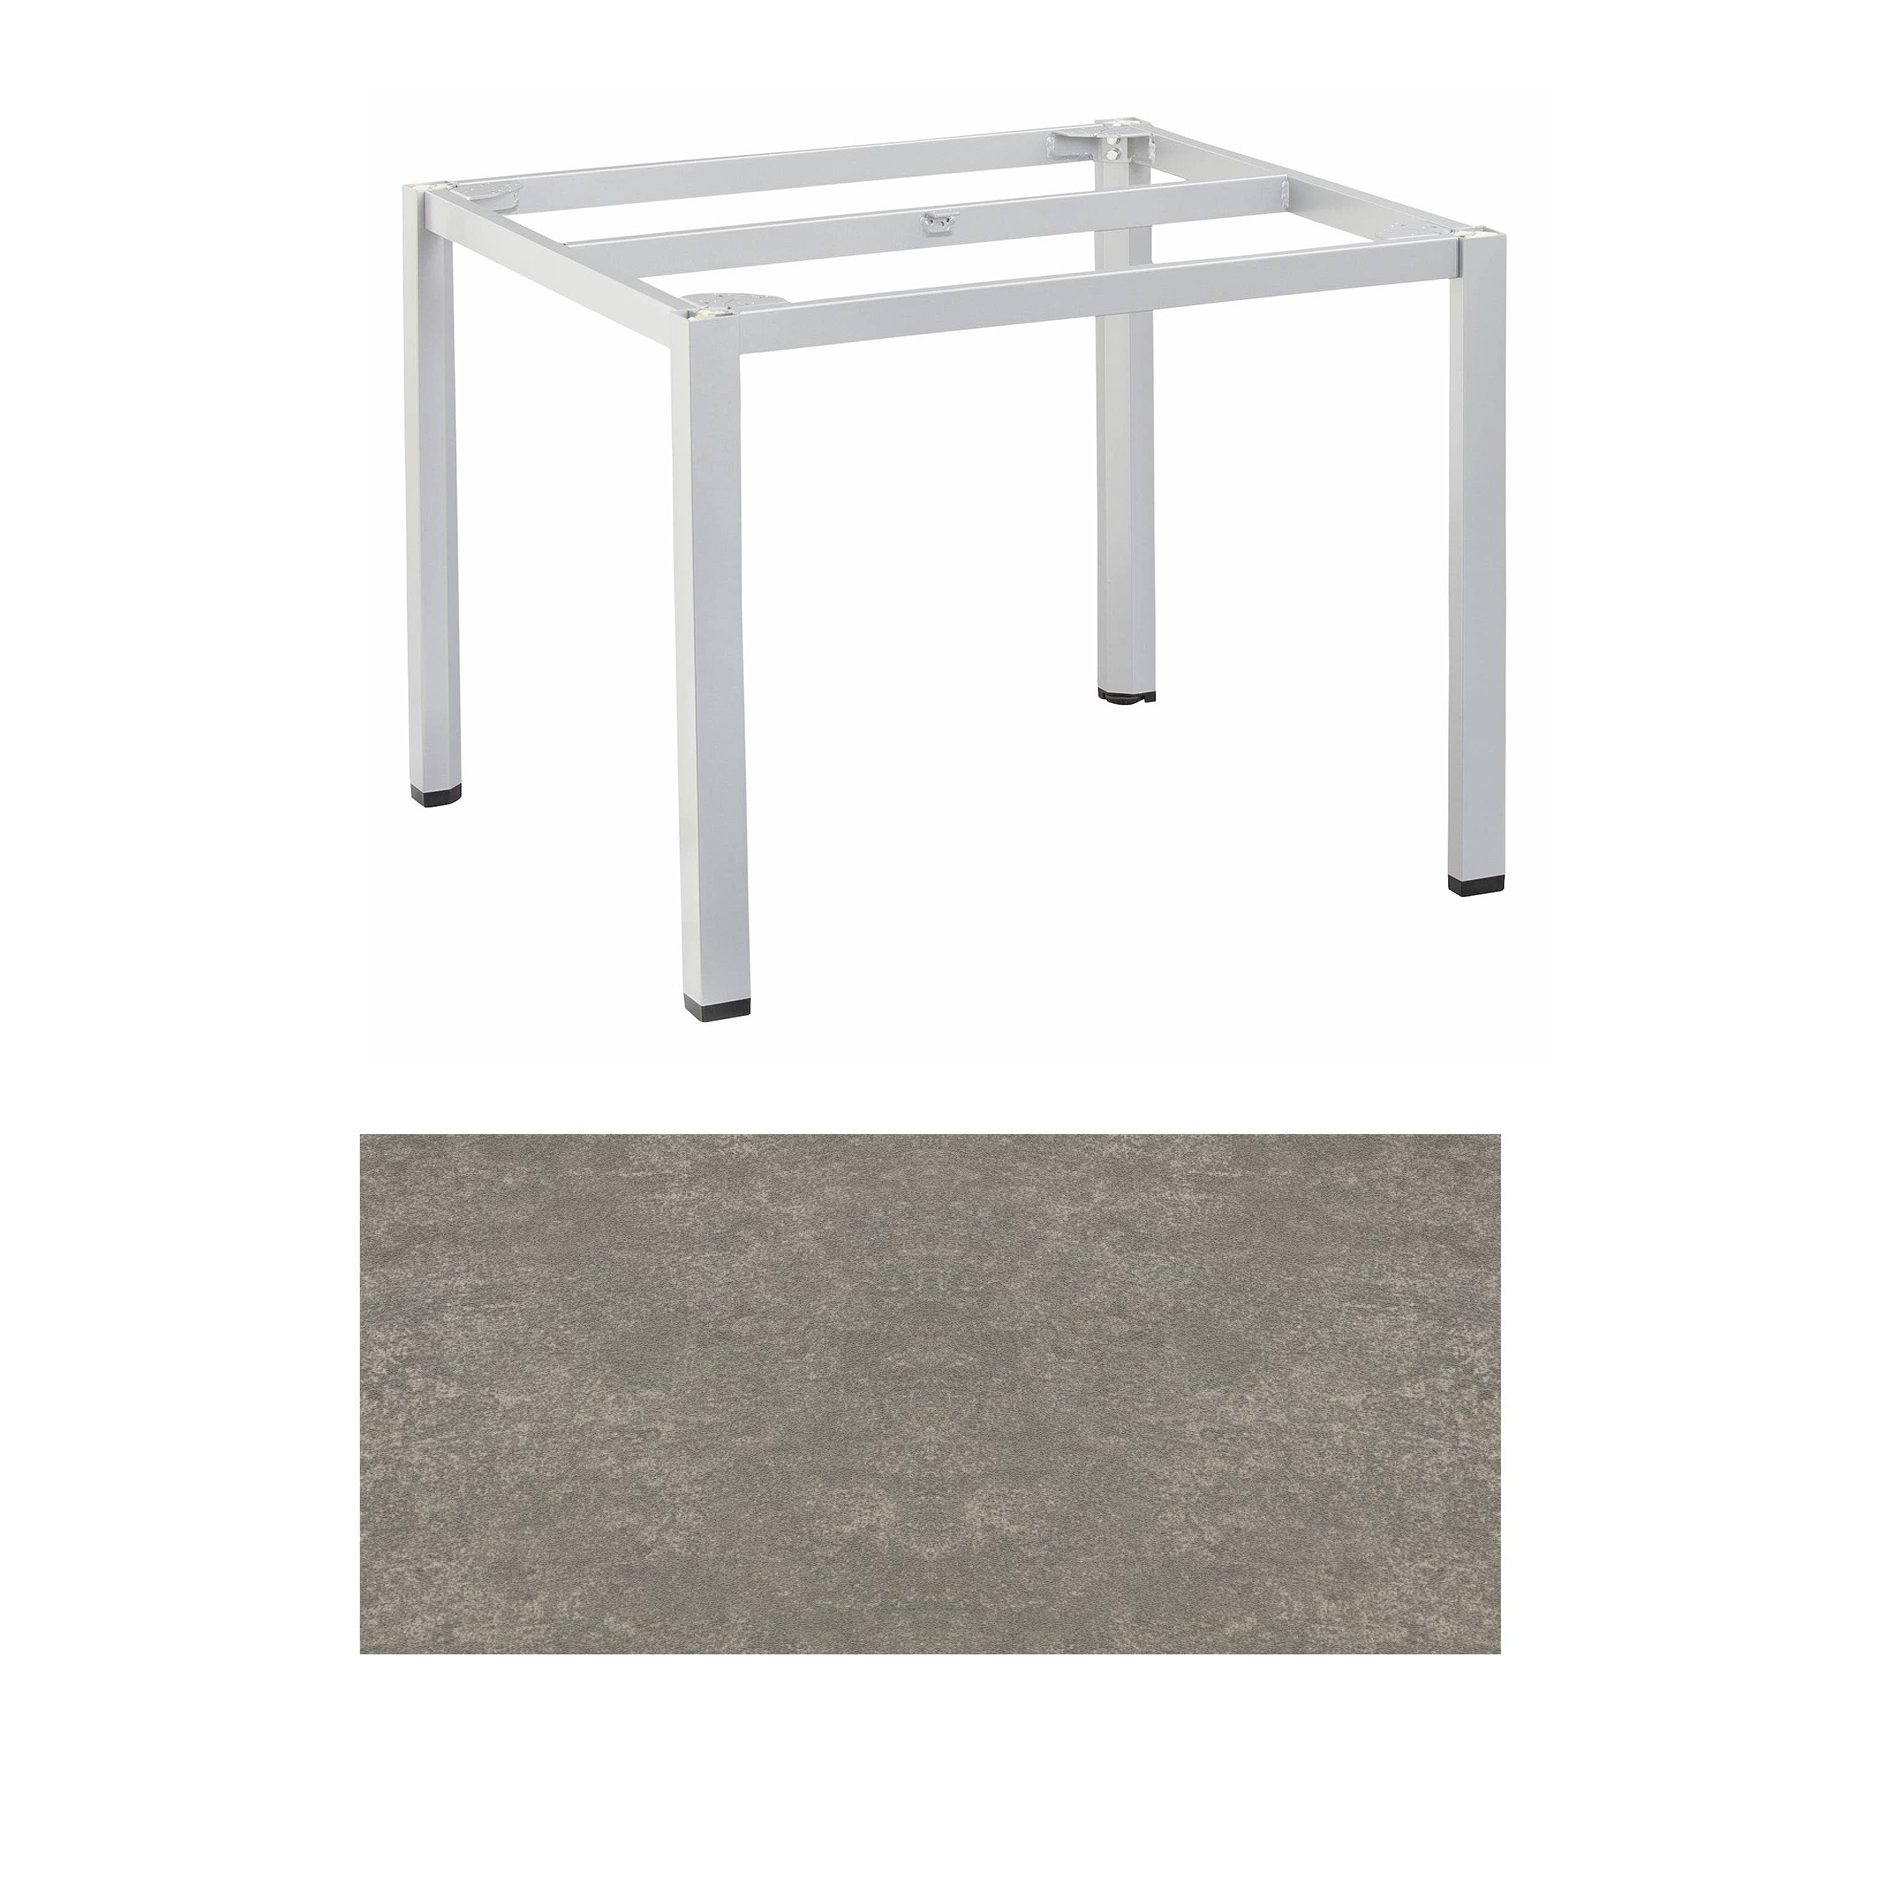 Kettler "Cubic" Tischgestell 95x95 cm, Aluminium silber mit Keramik-Platte grau-taupe